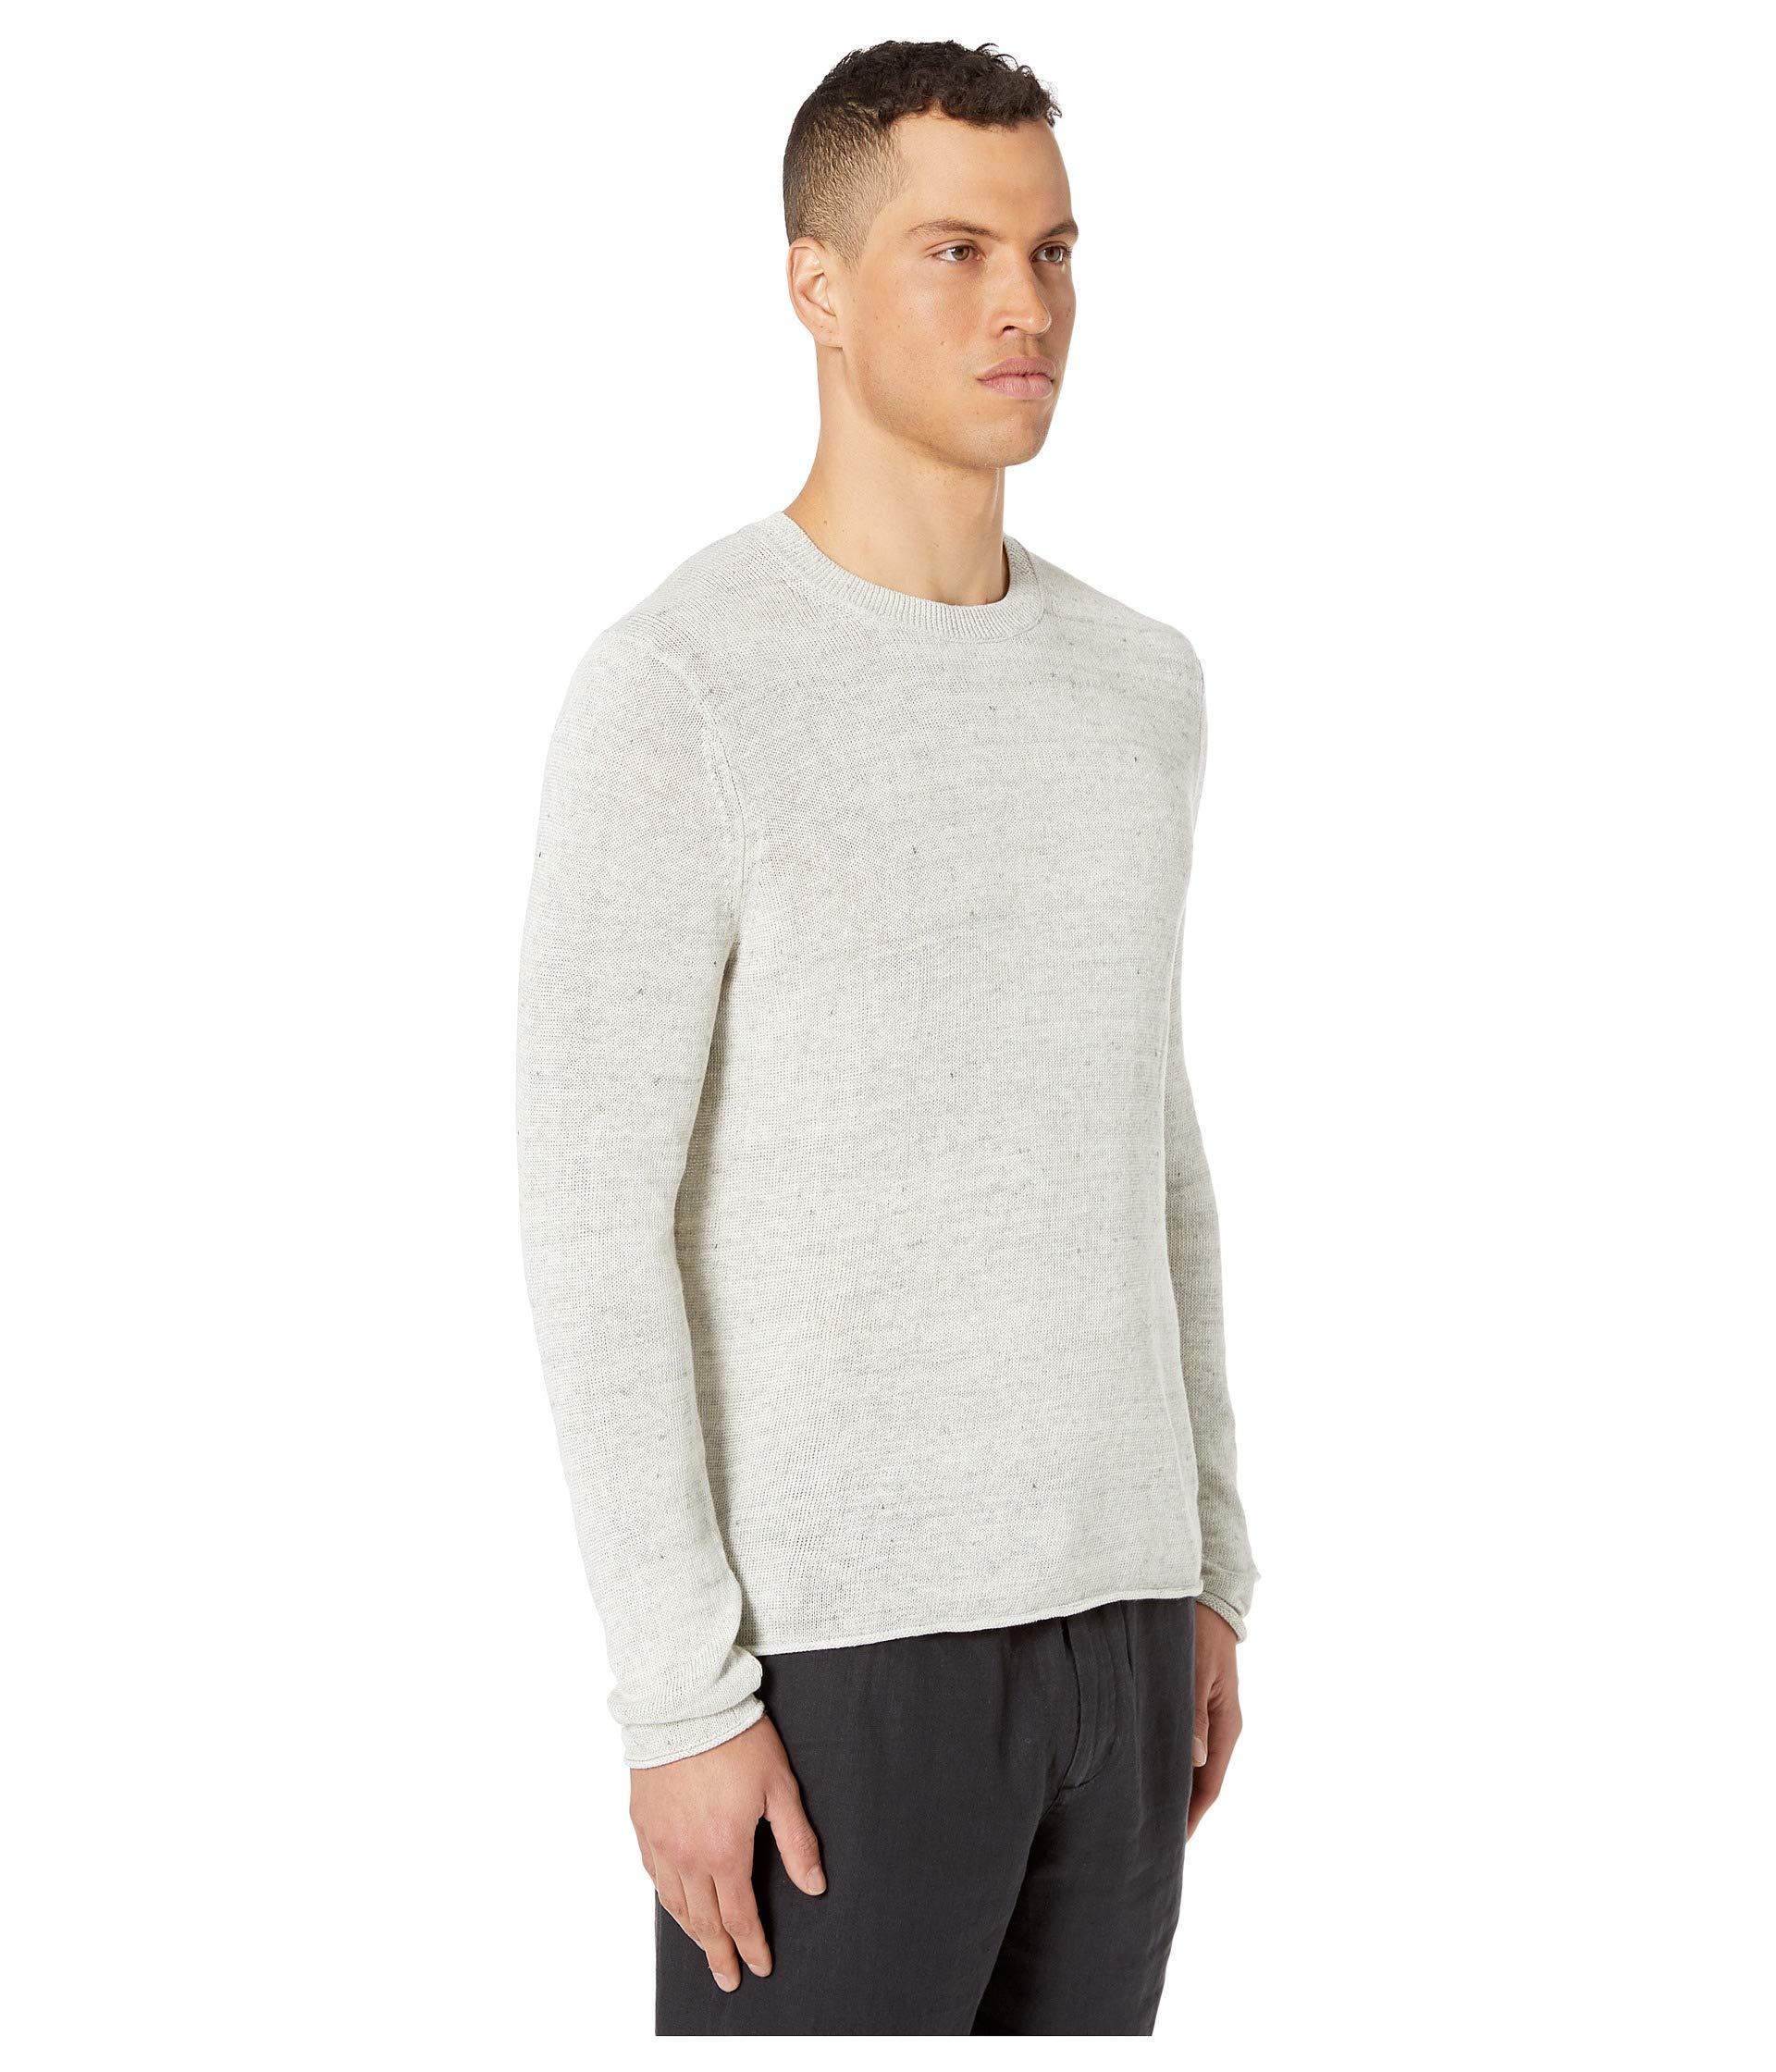 Vince Linen Crew Neck Sweater in White for Men - Lyst